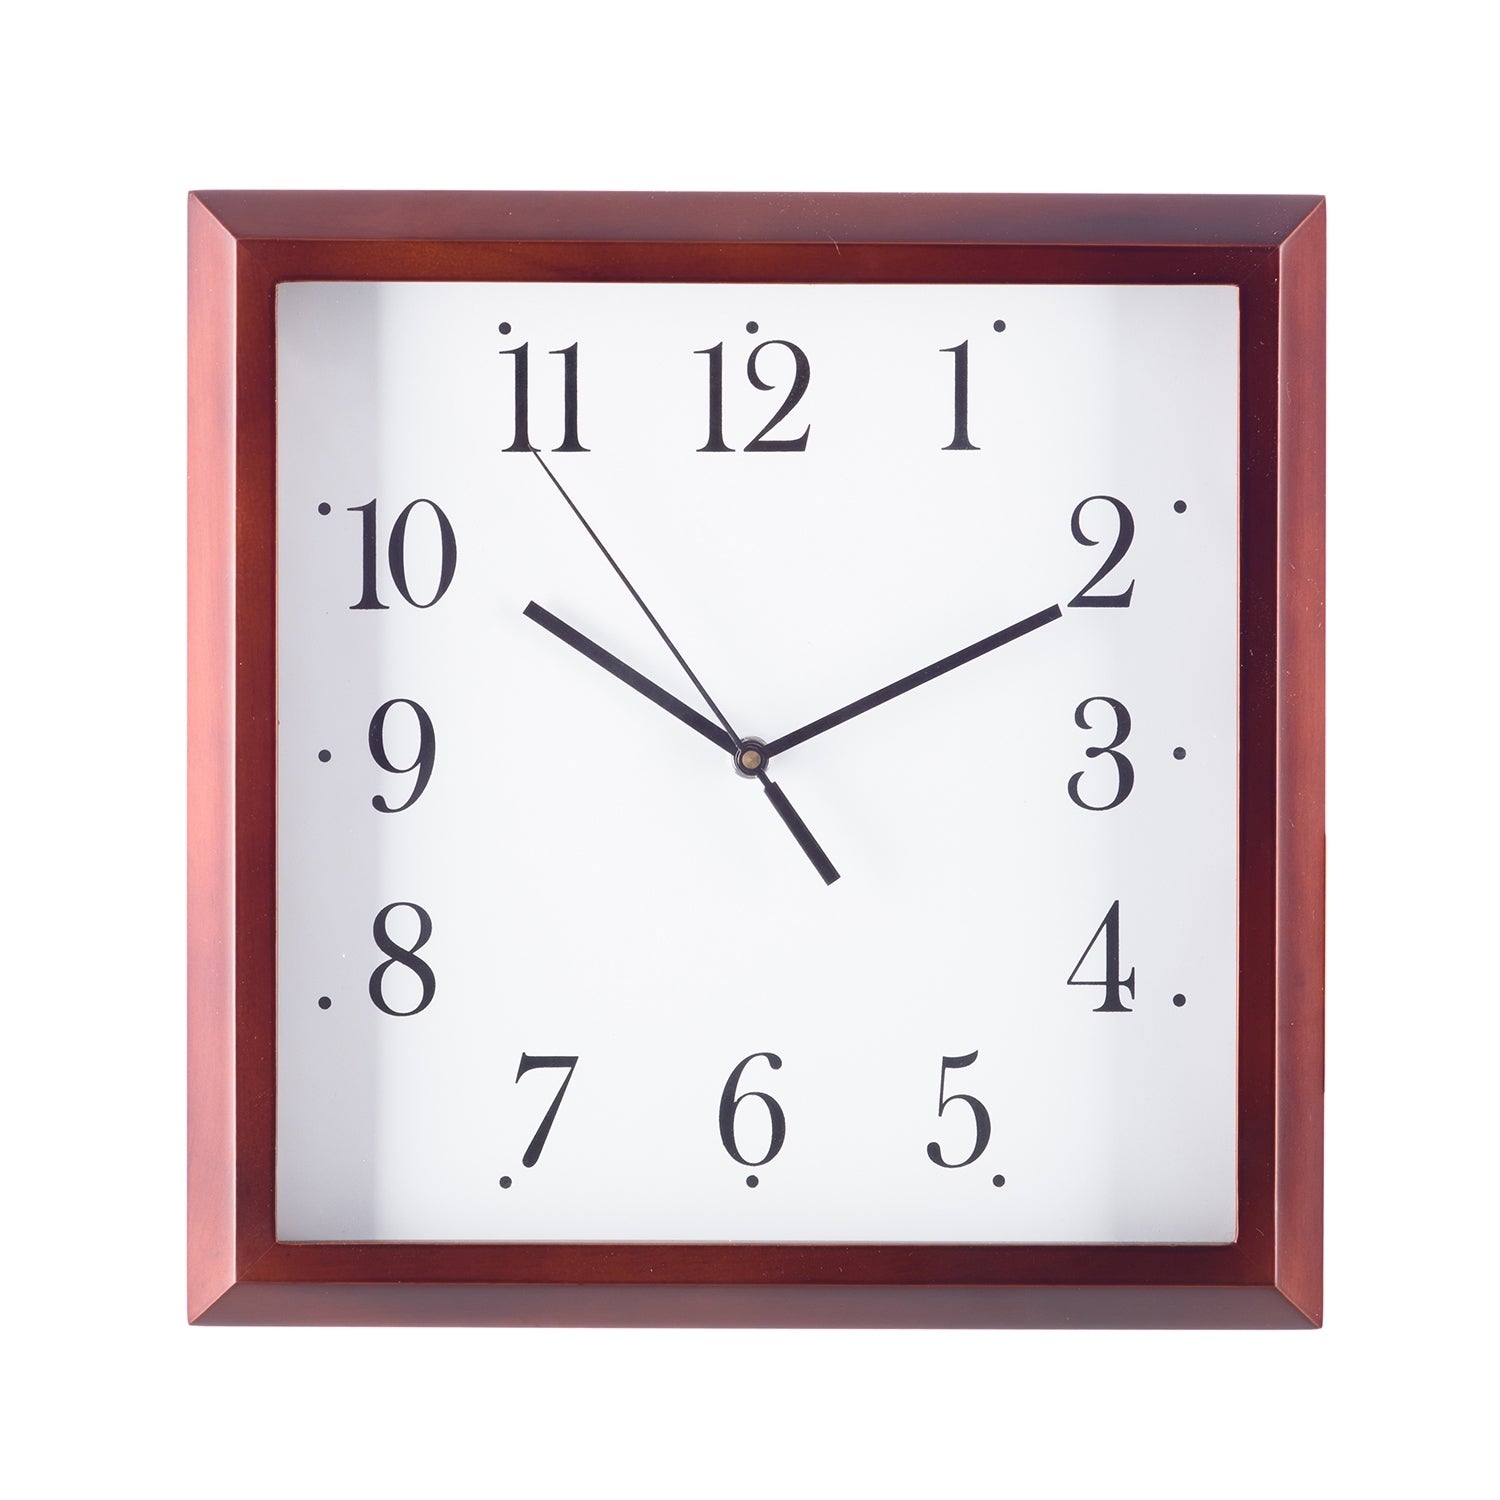 Premium Decorative Analog Square Shape Wooden Wall Clock